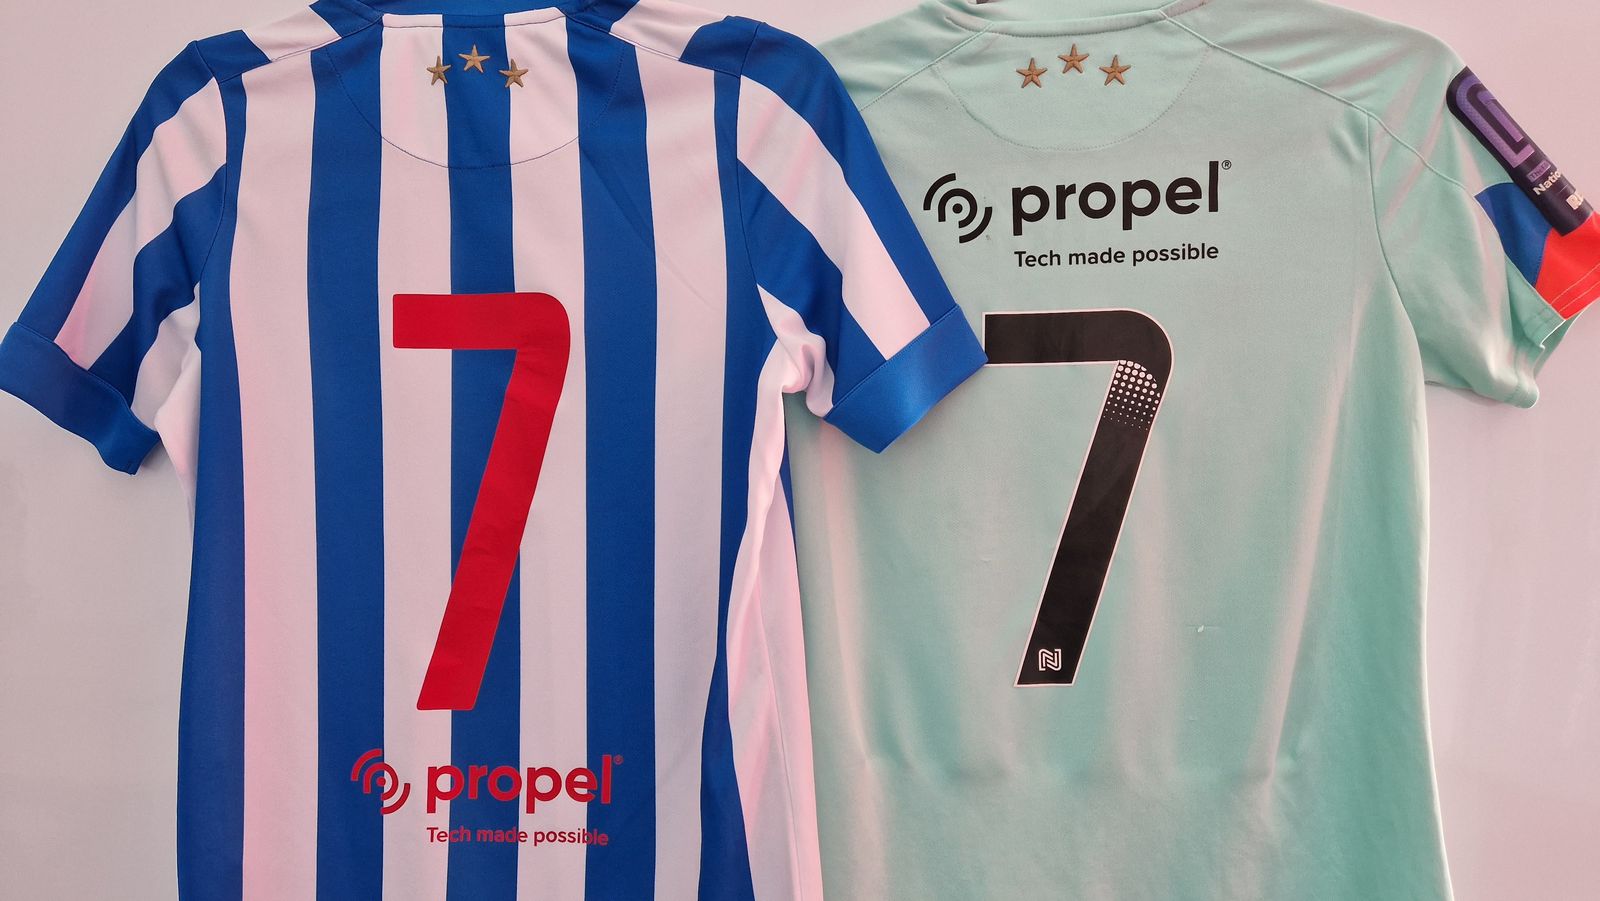 Propel named as shirt sponsor for Huddersfield Town Women’s U14 team